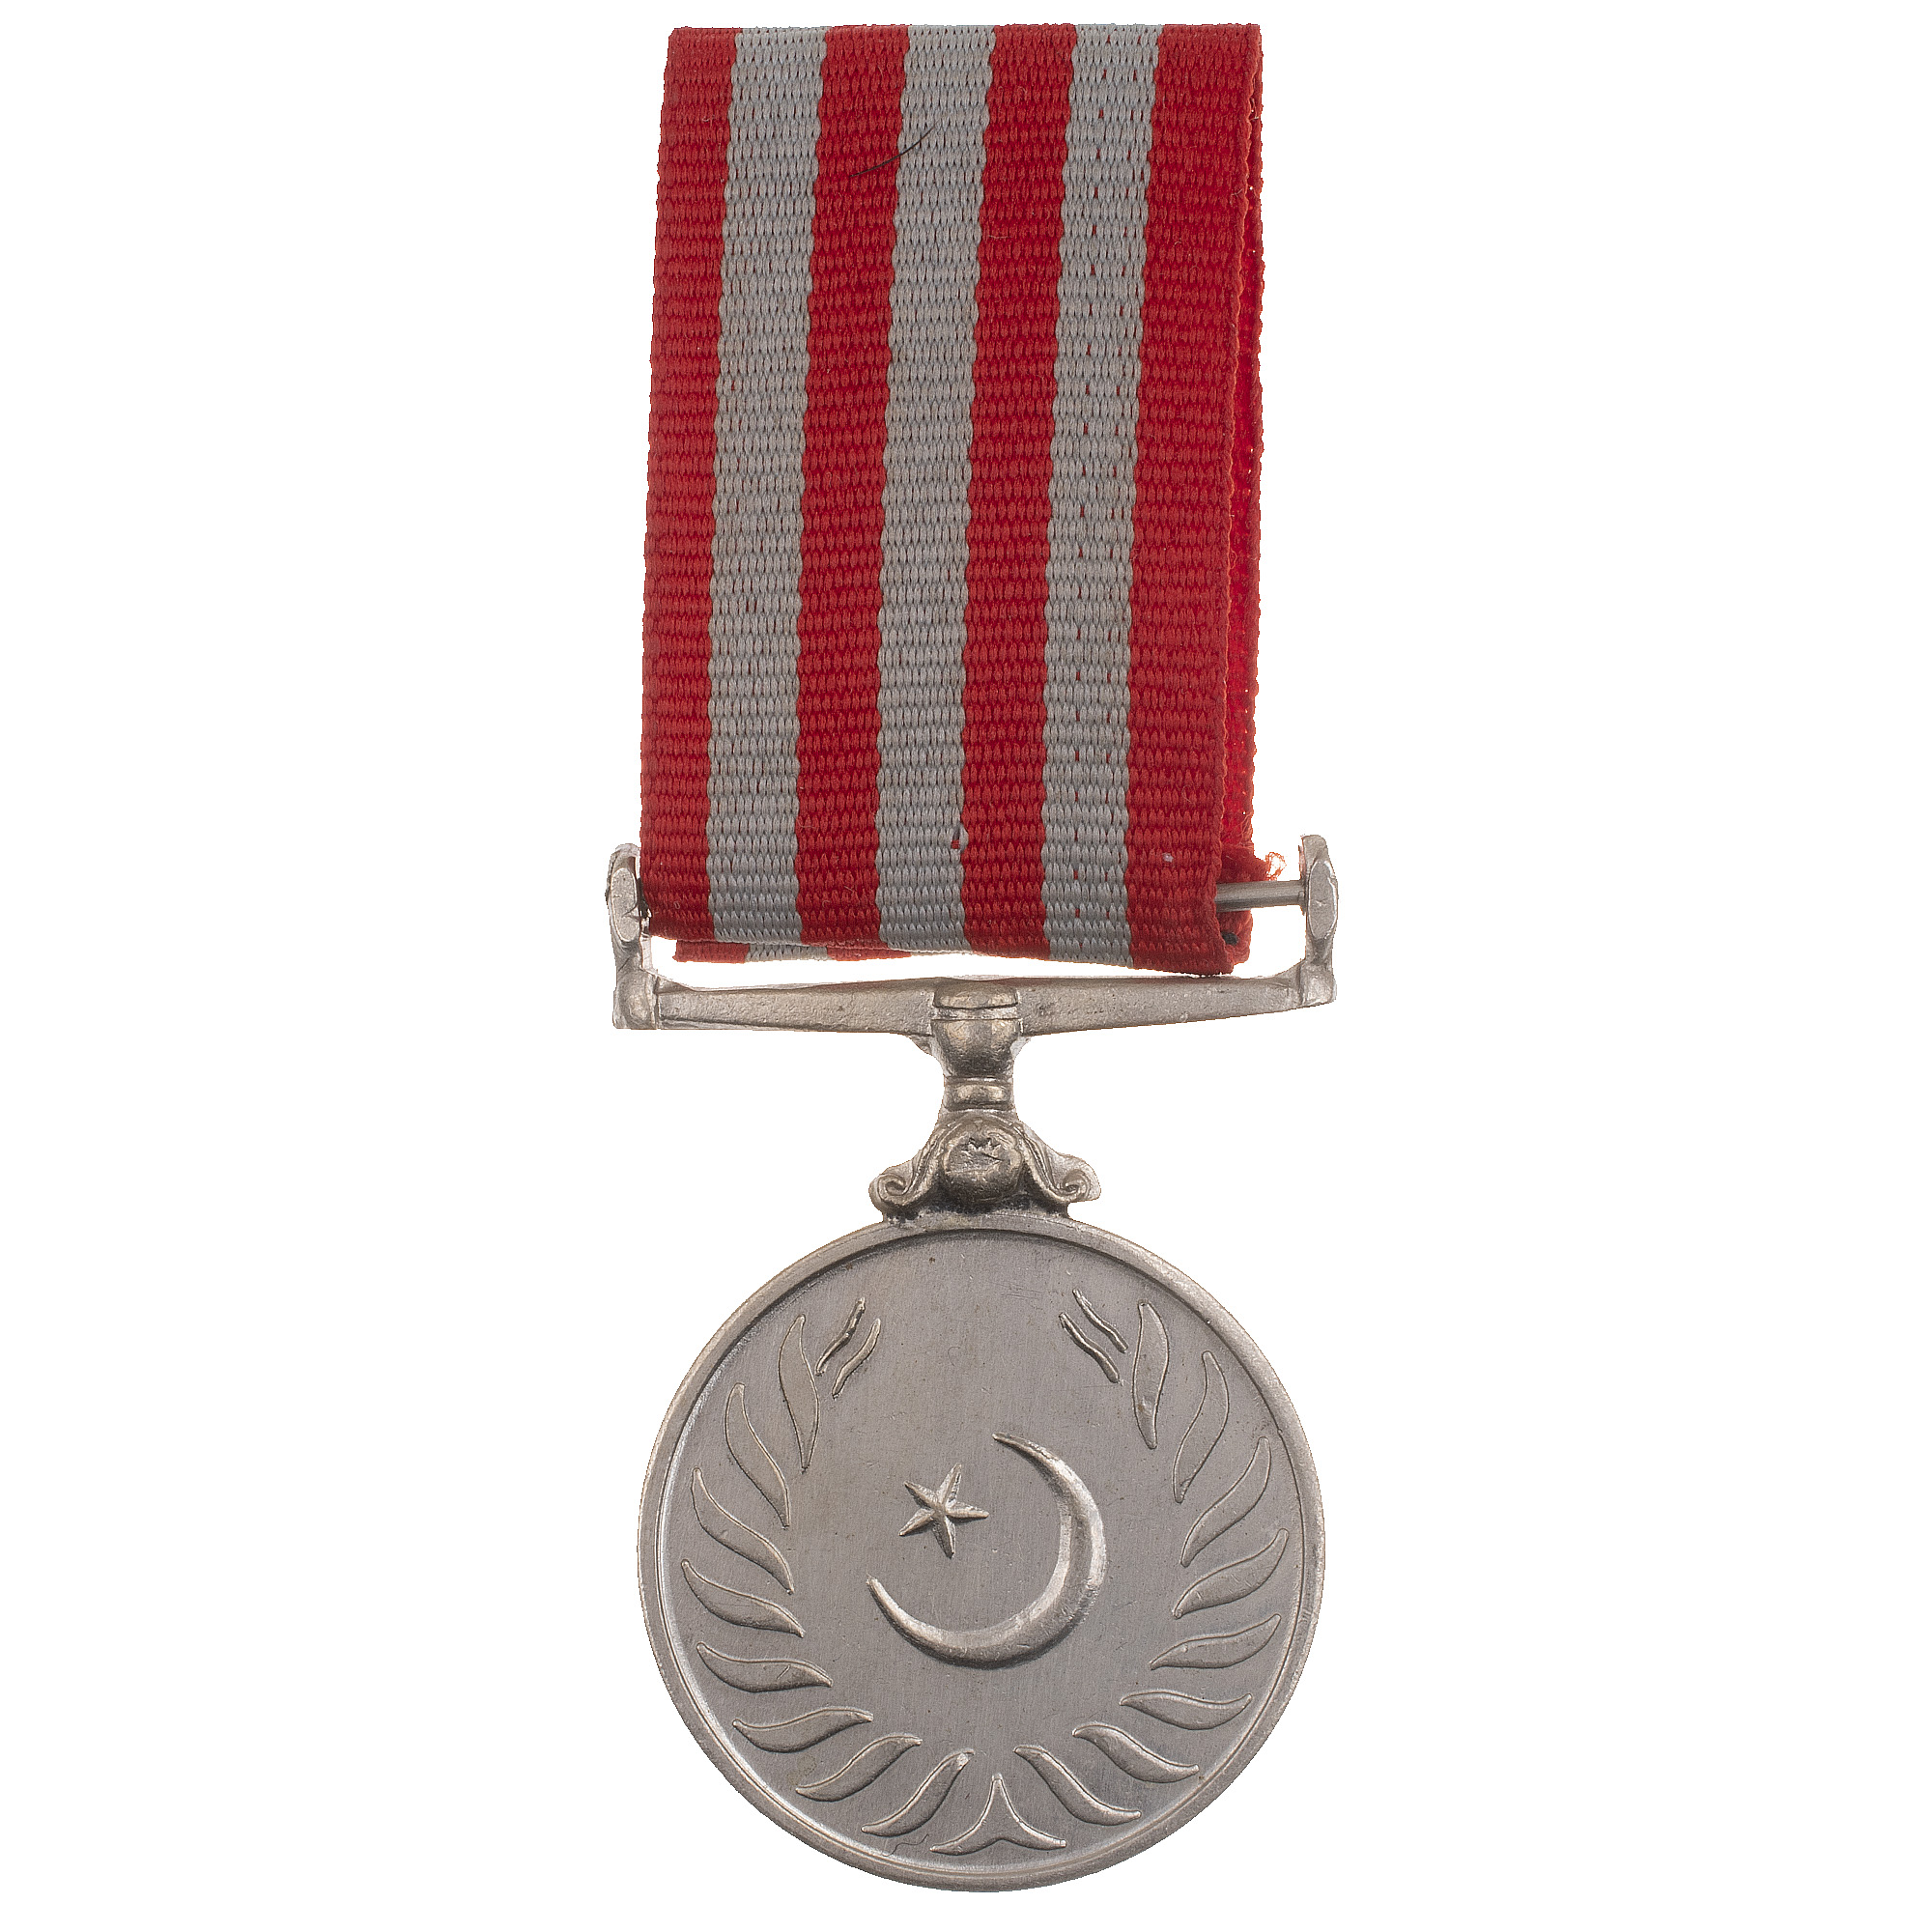 Пакистан. Медаль "За 20 лет Выслуги"